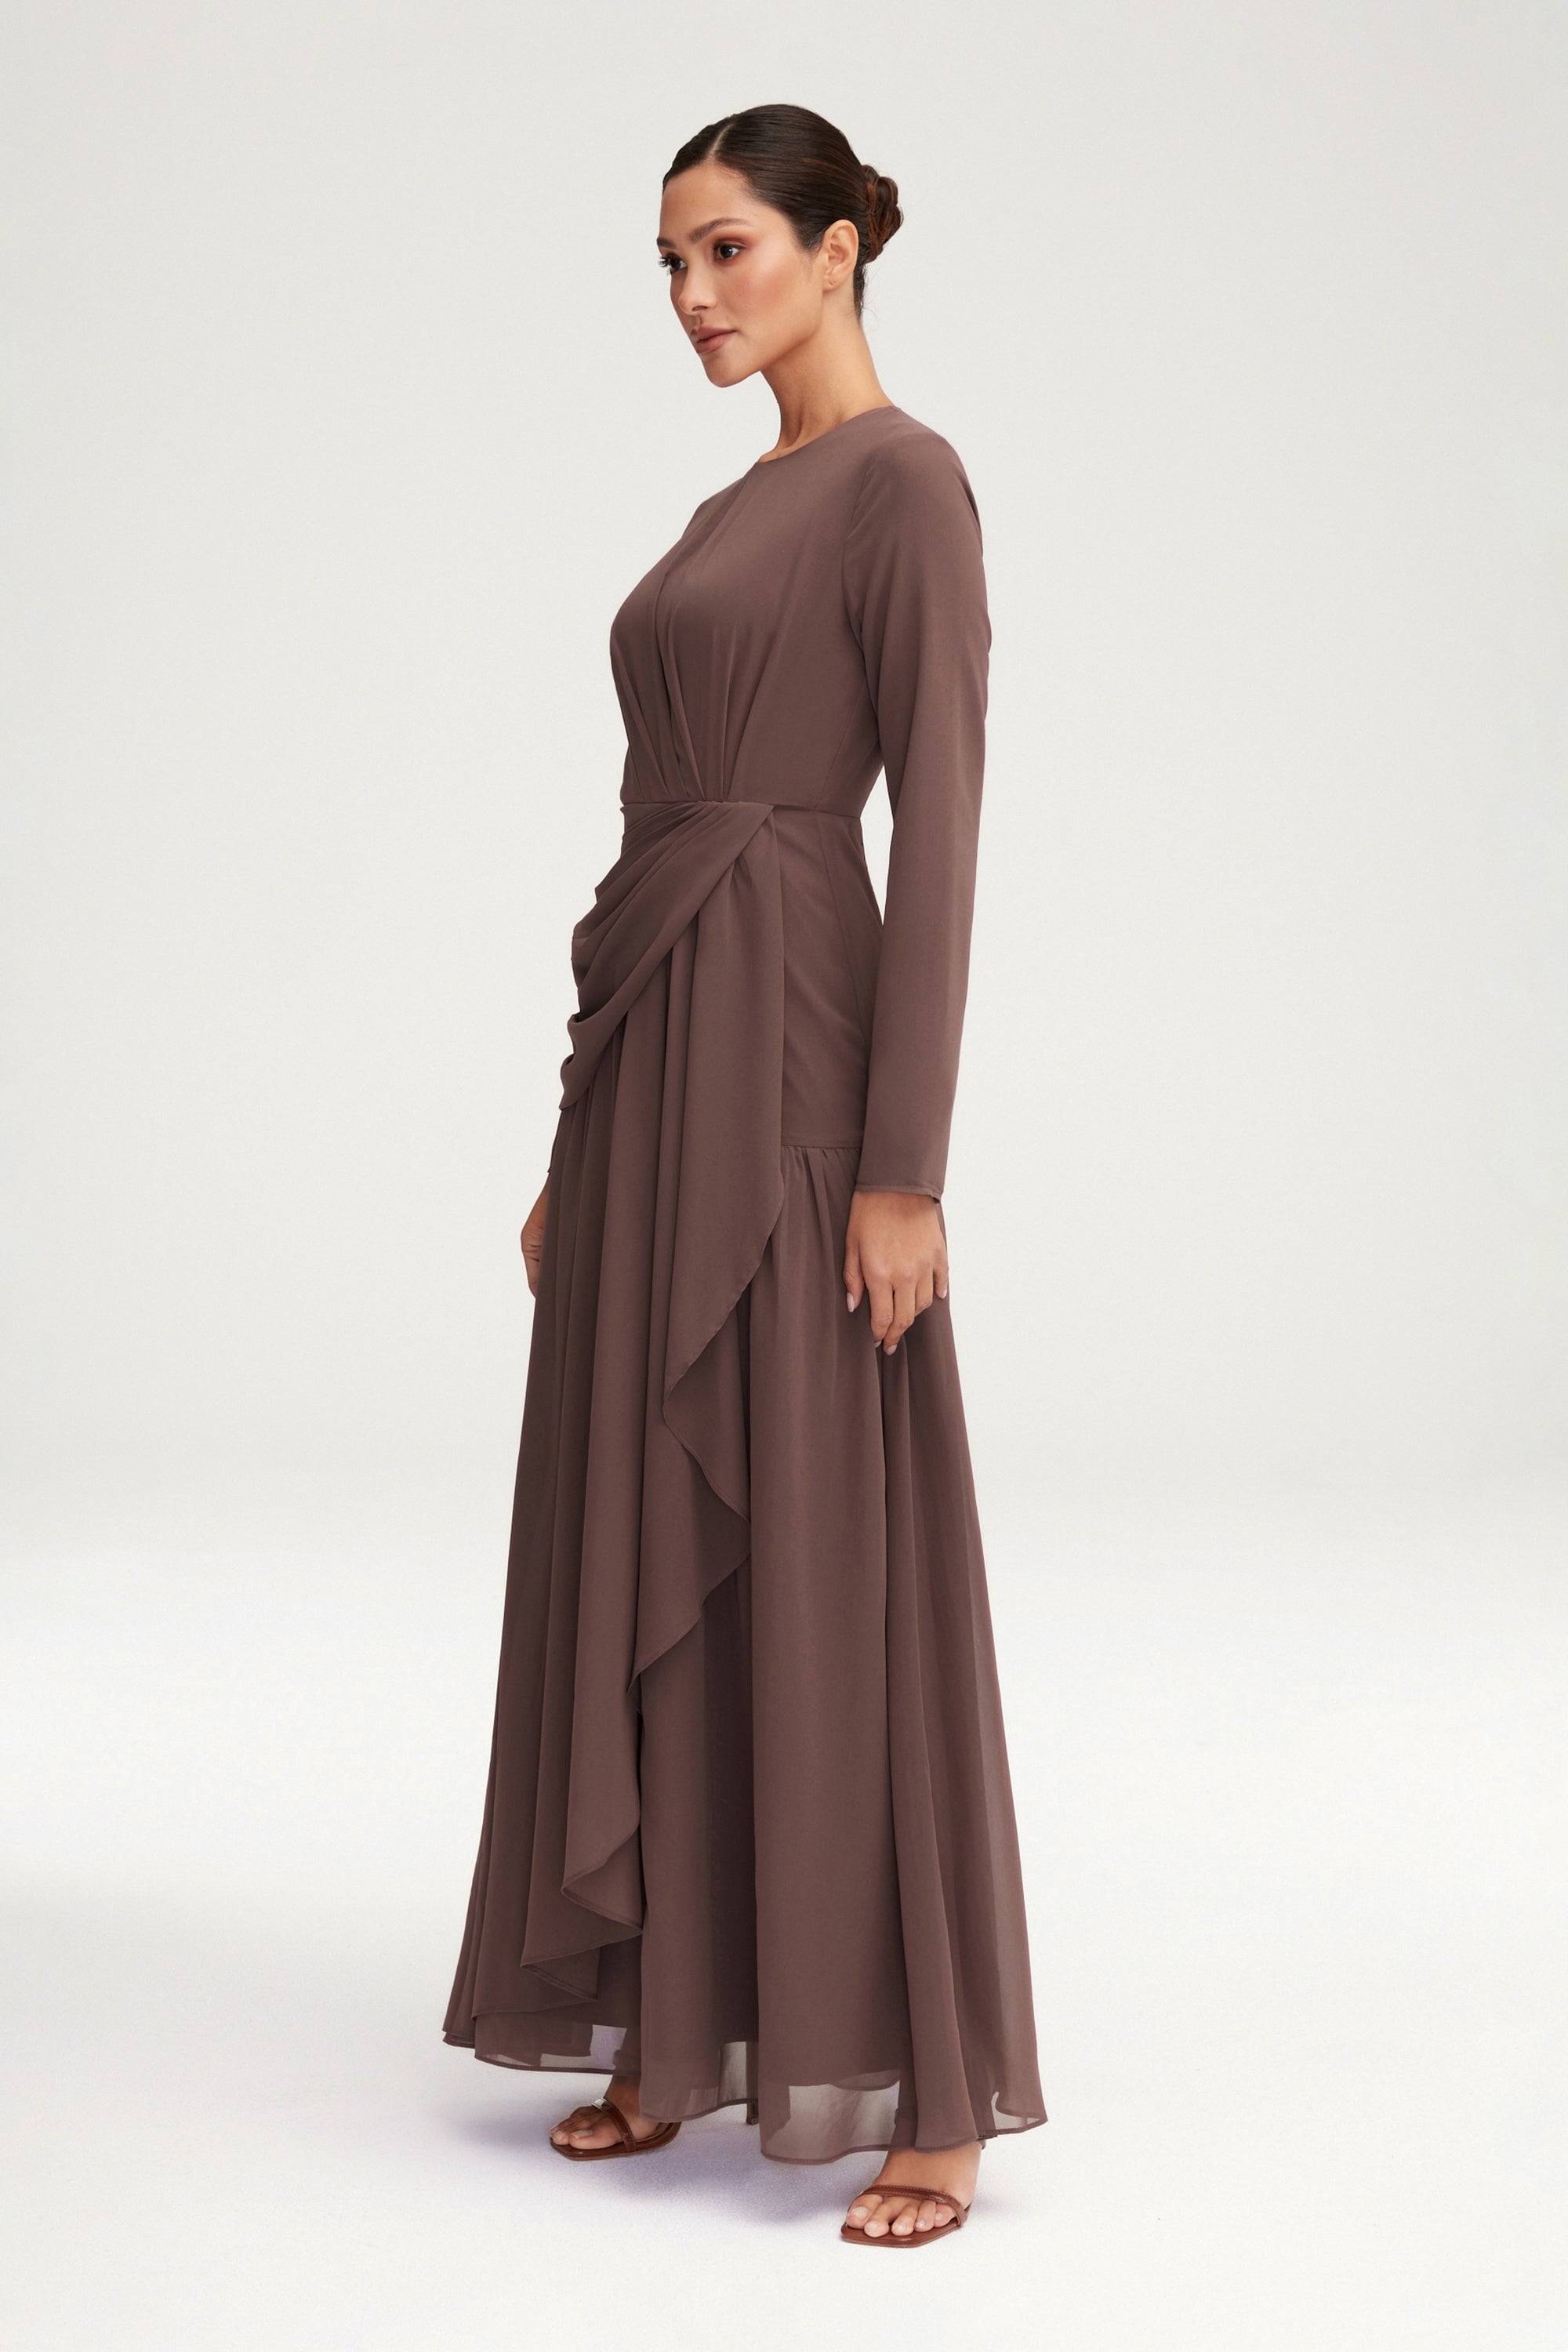 Huda Chiffon Maxi Dress - Taupe Clothing epschoolboard 